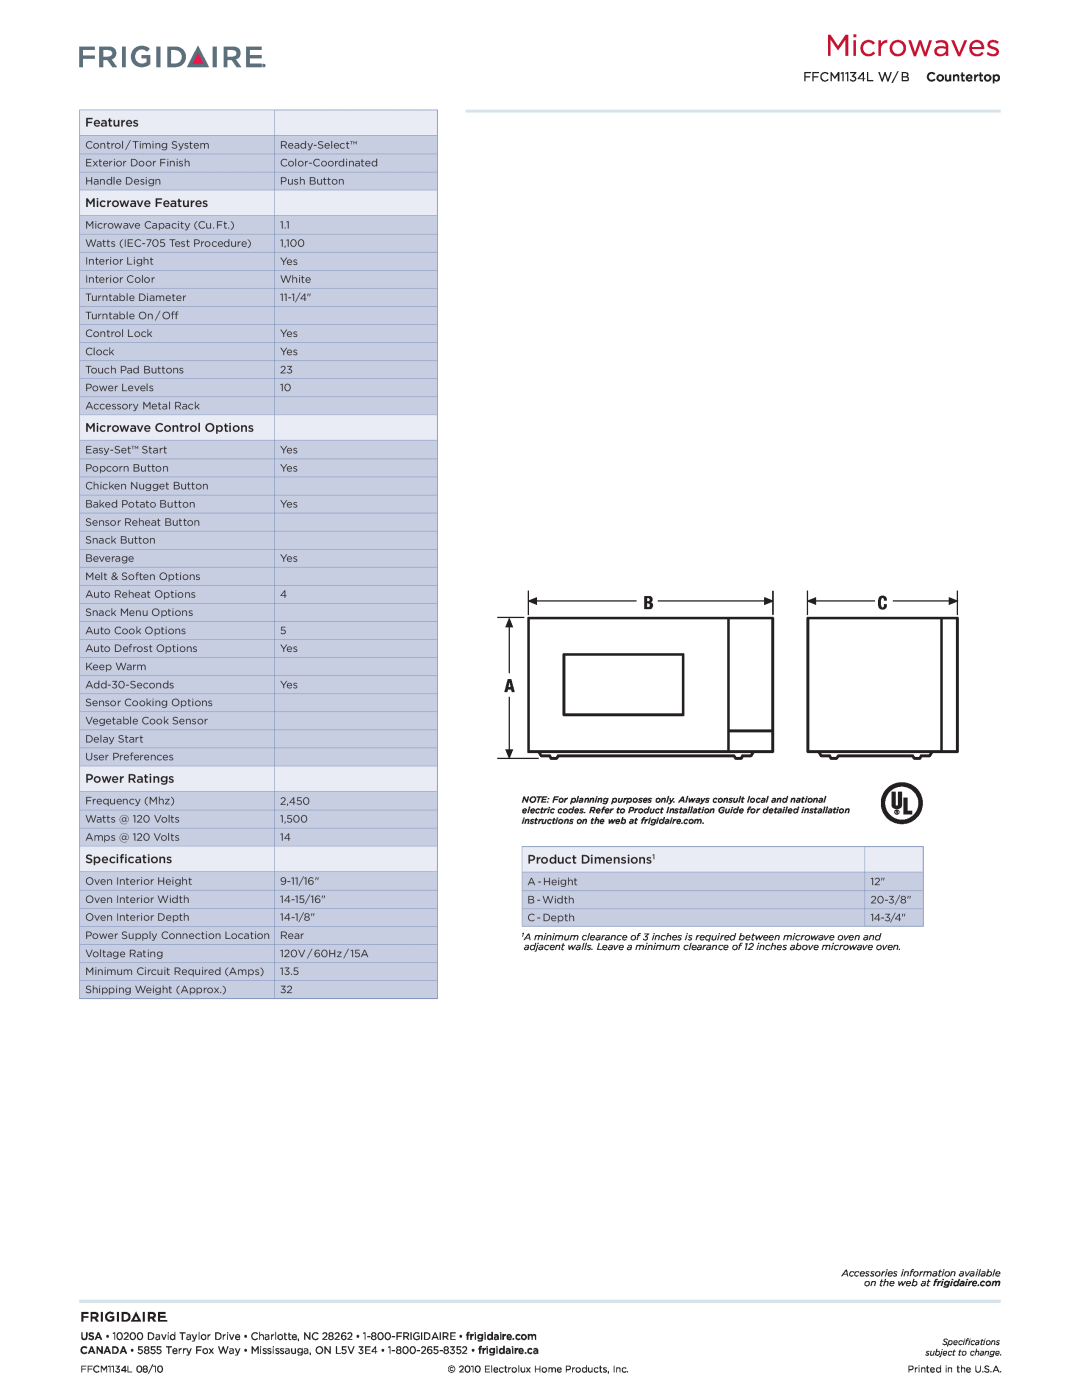 Frigidaire dimensions Microwaves, FFCM1134L W/ B Countertop 